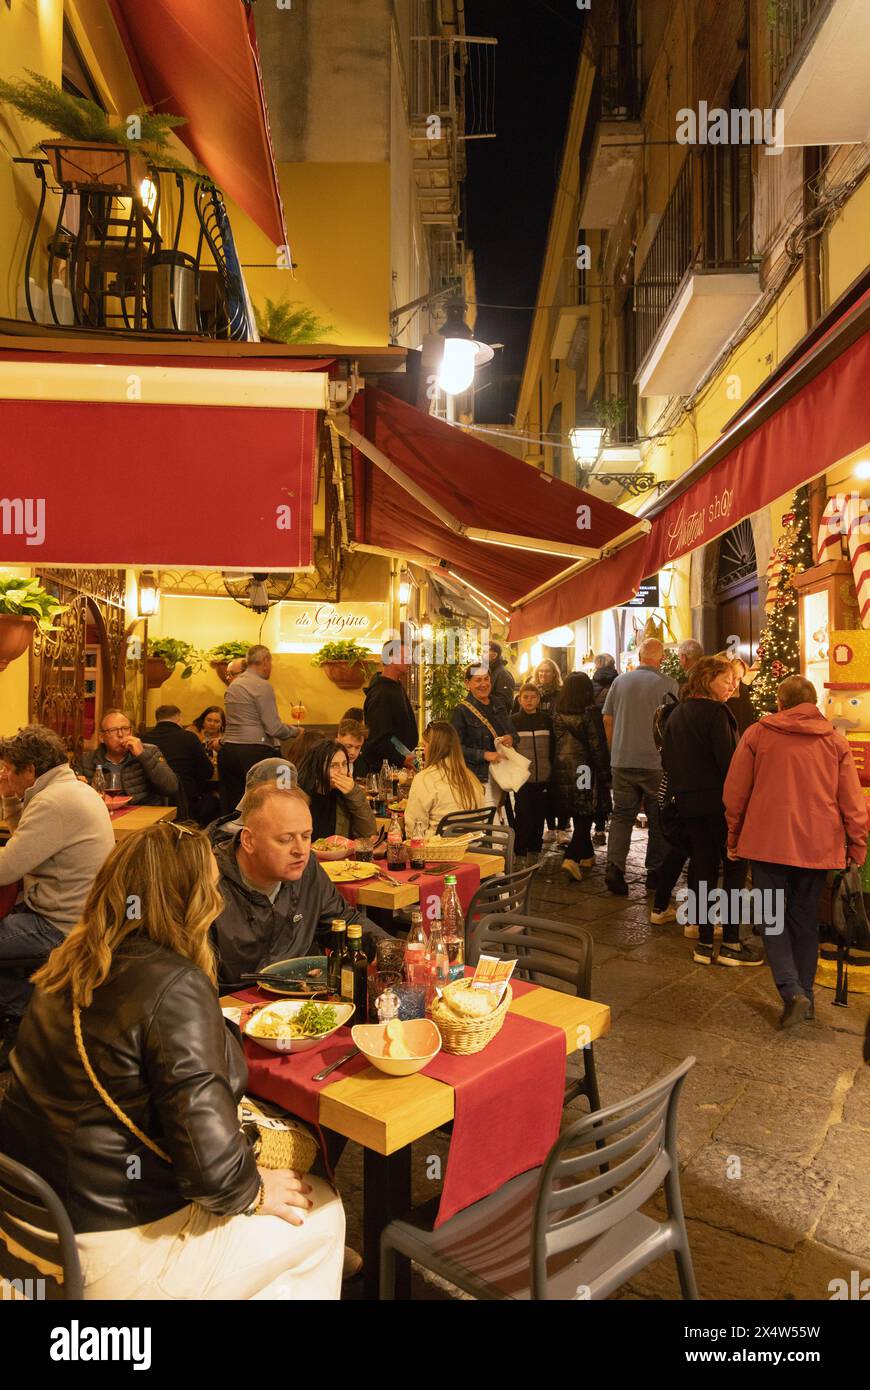 Sorrento night scene - people eating al fresco in a restaurant on a narrow Sorrento street, Sorrento Italy Europe Stock Photo